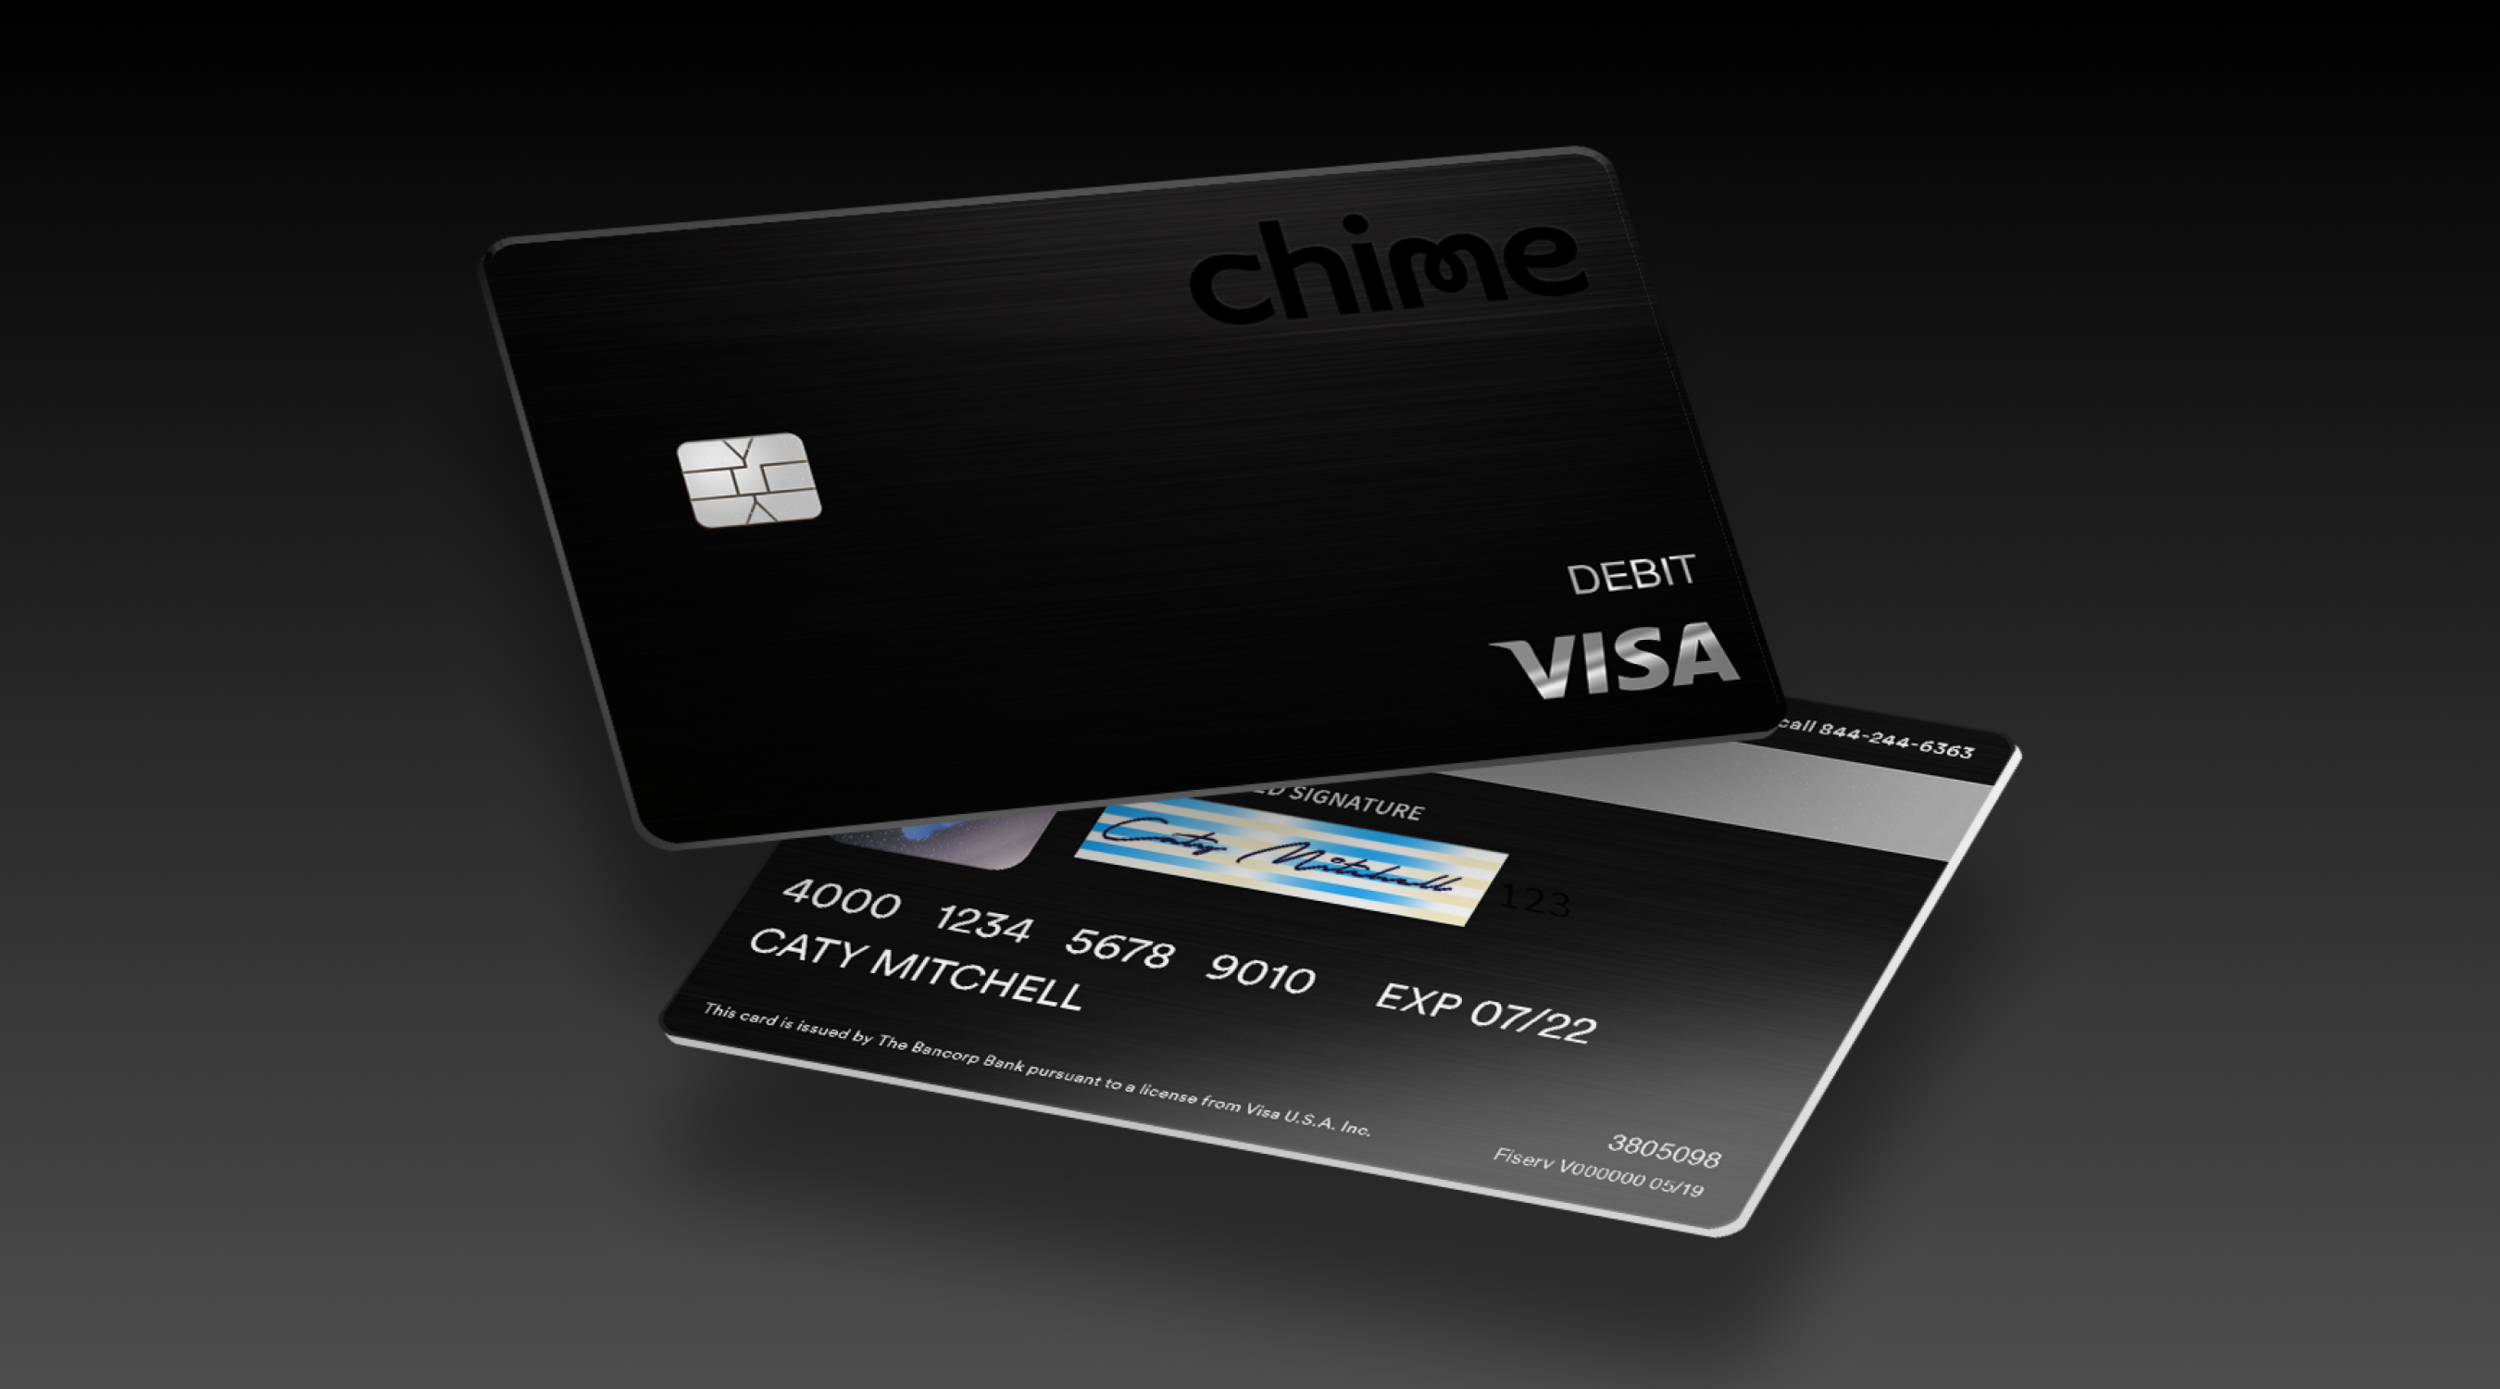 Metal credit cards and metal debit cards